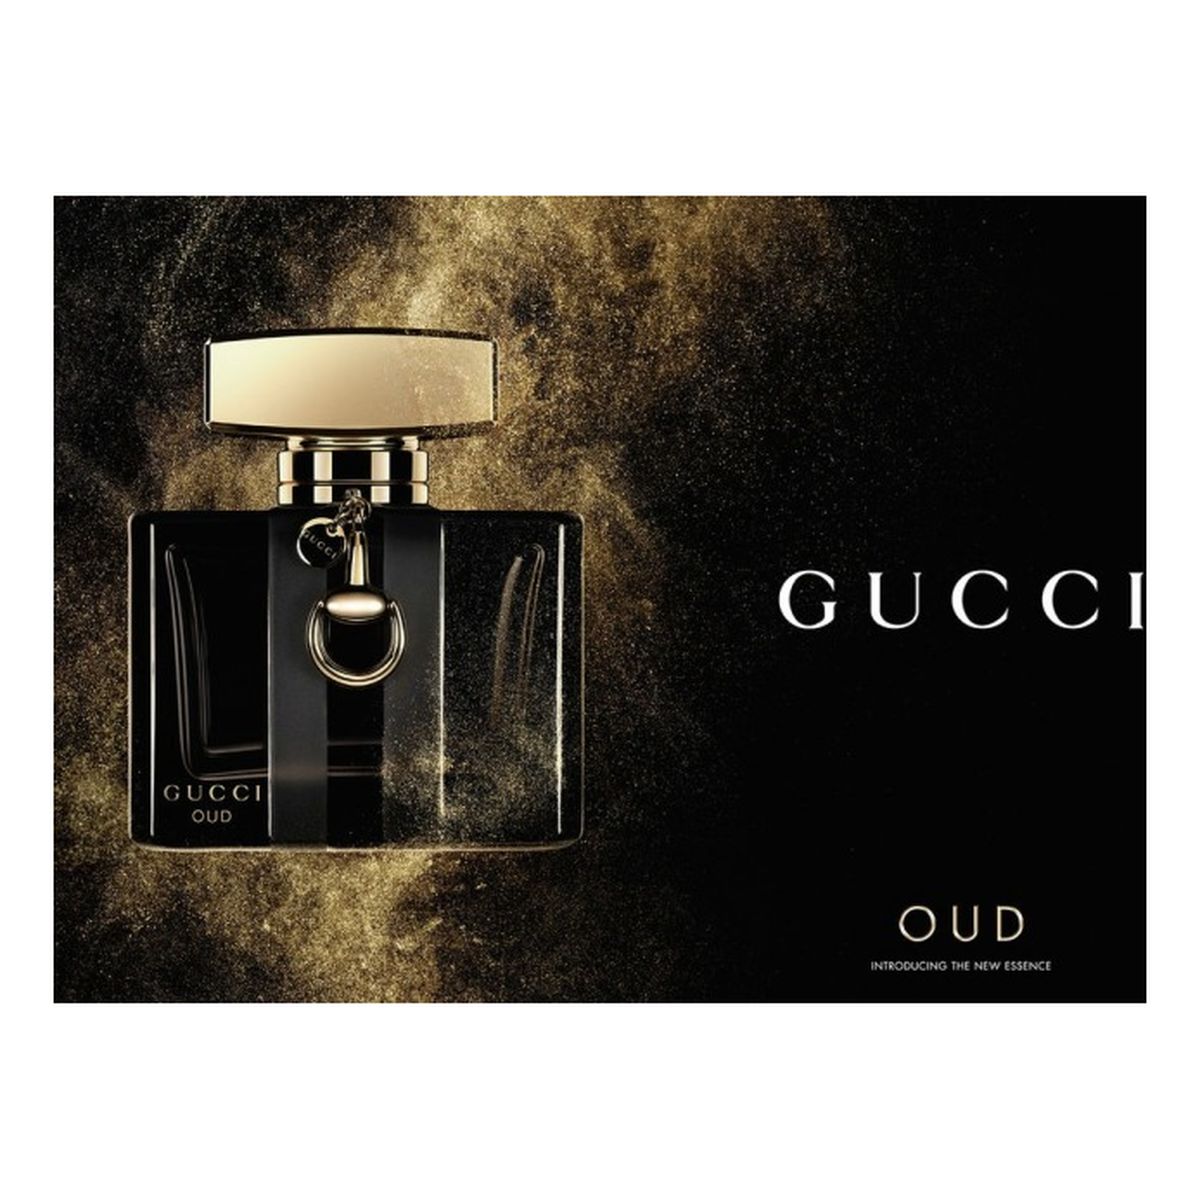 Gucci OUD Woda perfumowana 75ml